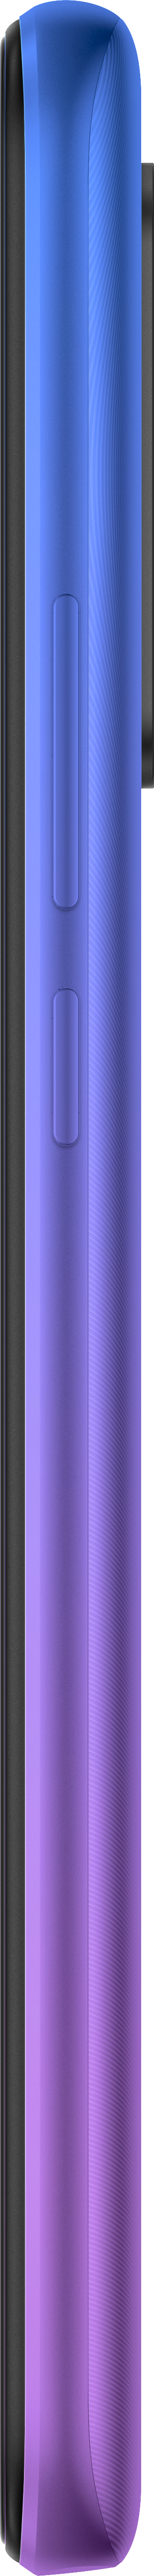 SIM REDMI Sunset Dual 9 GB 64 XIAOMI Purple